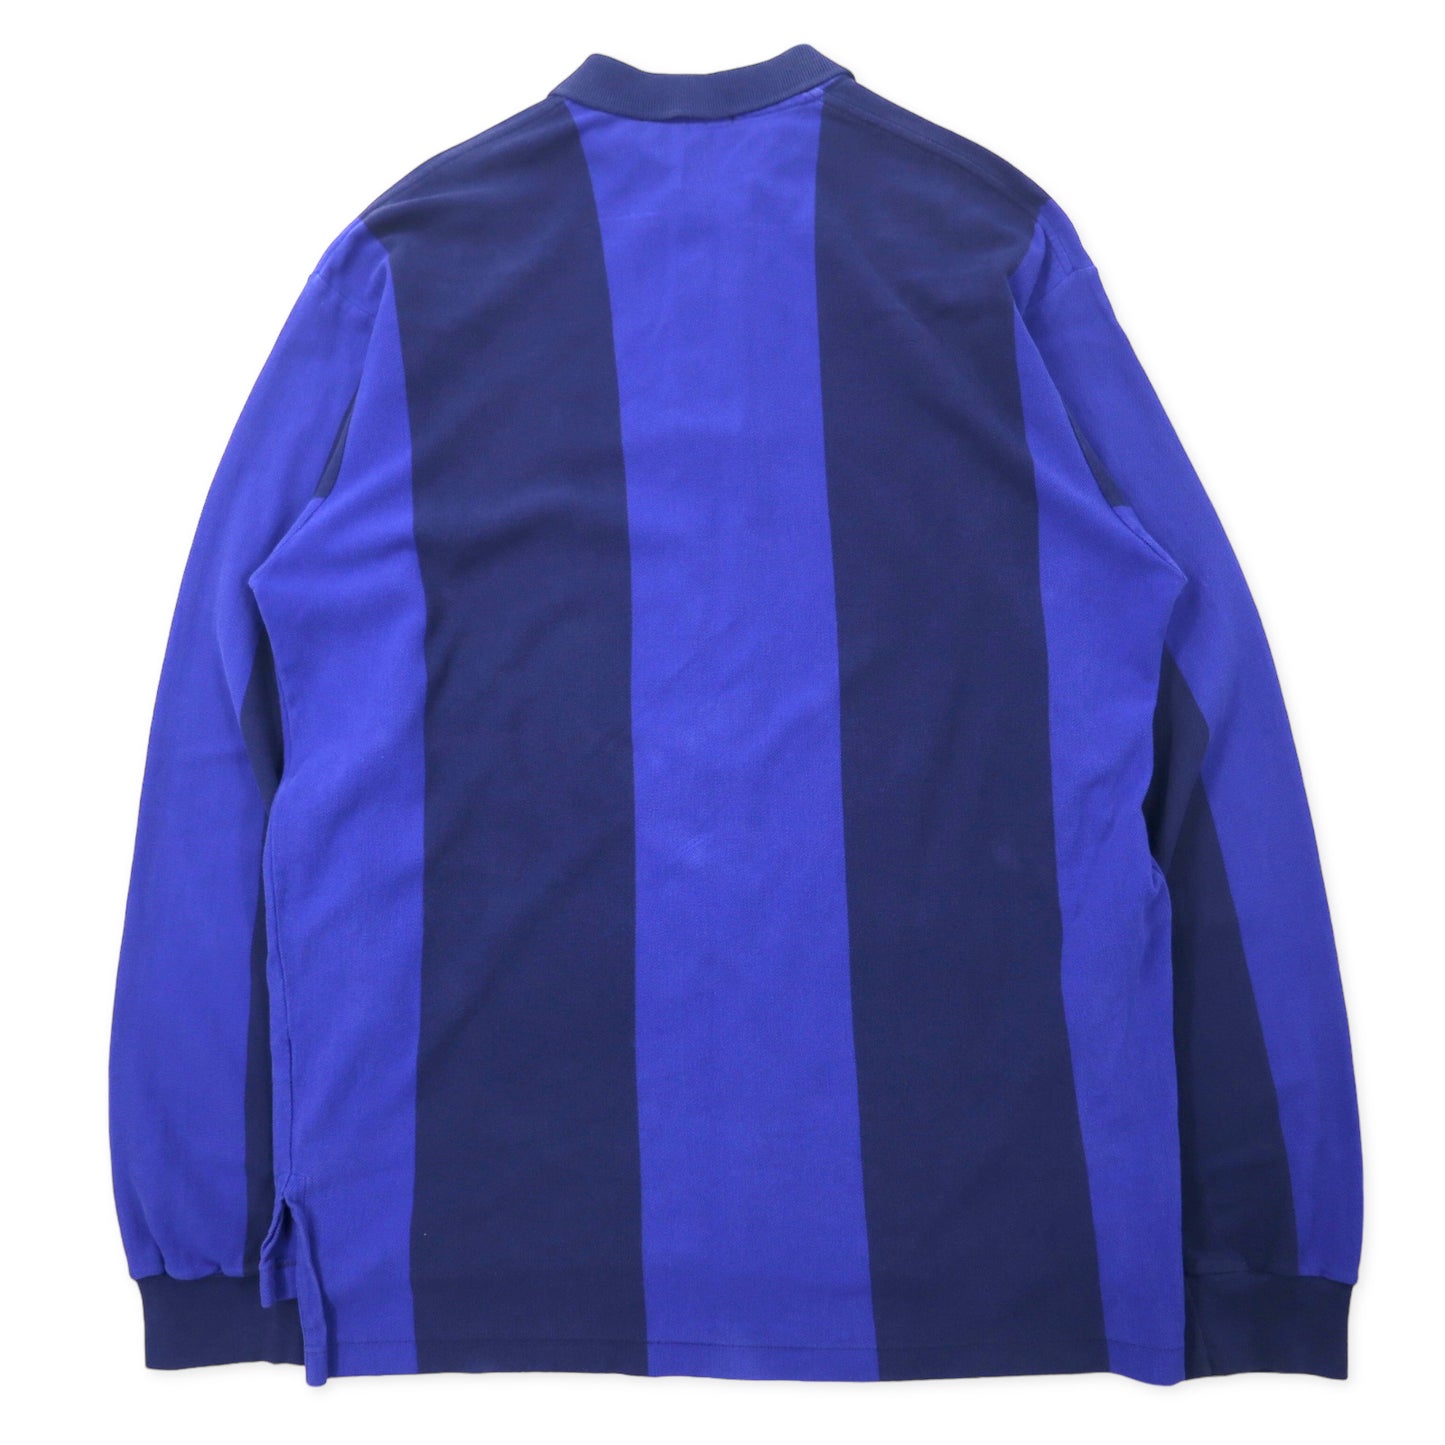 Polo by Ralph Lauren USA製 長袖ポロシャツ ラガーシャツ L ネイビー ブルー ストライプ コットン スモールポニー刺繍 ビッグサイズ